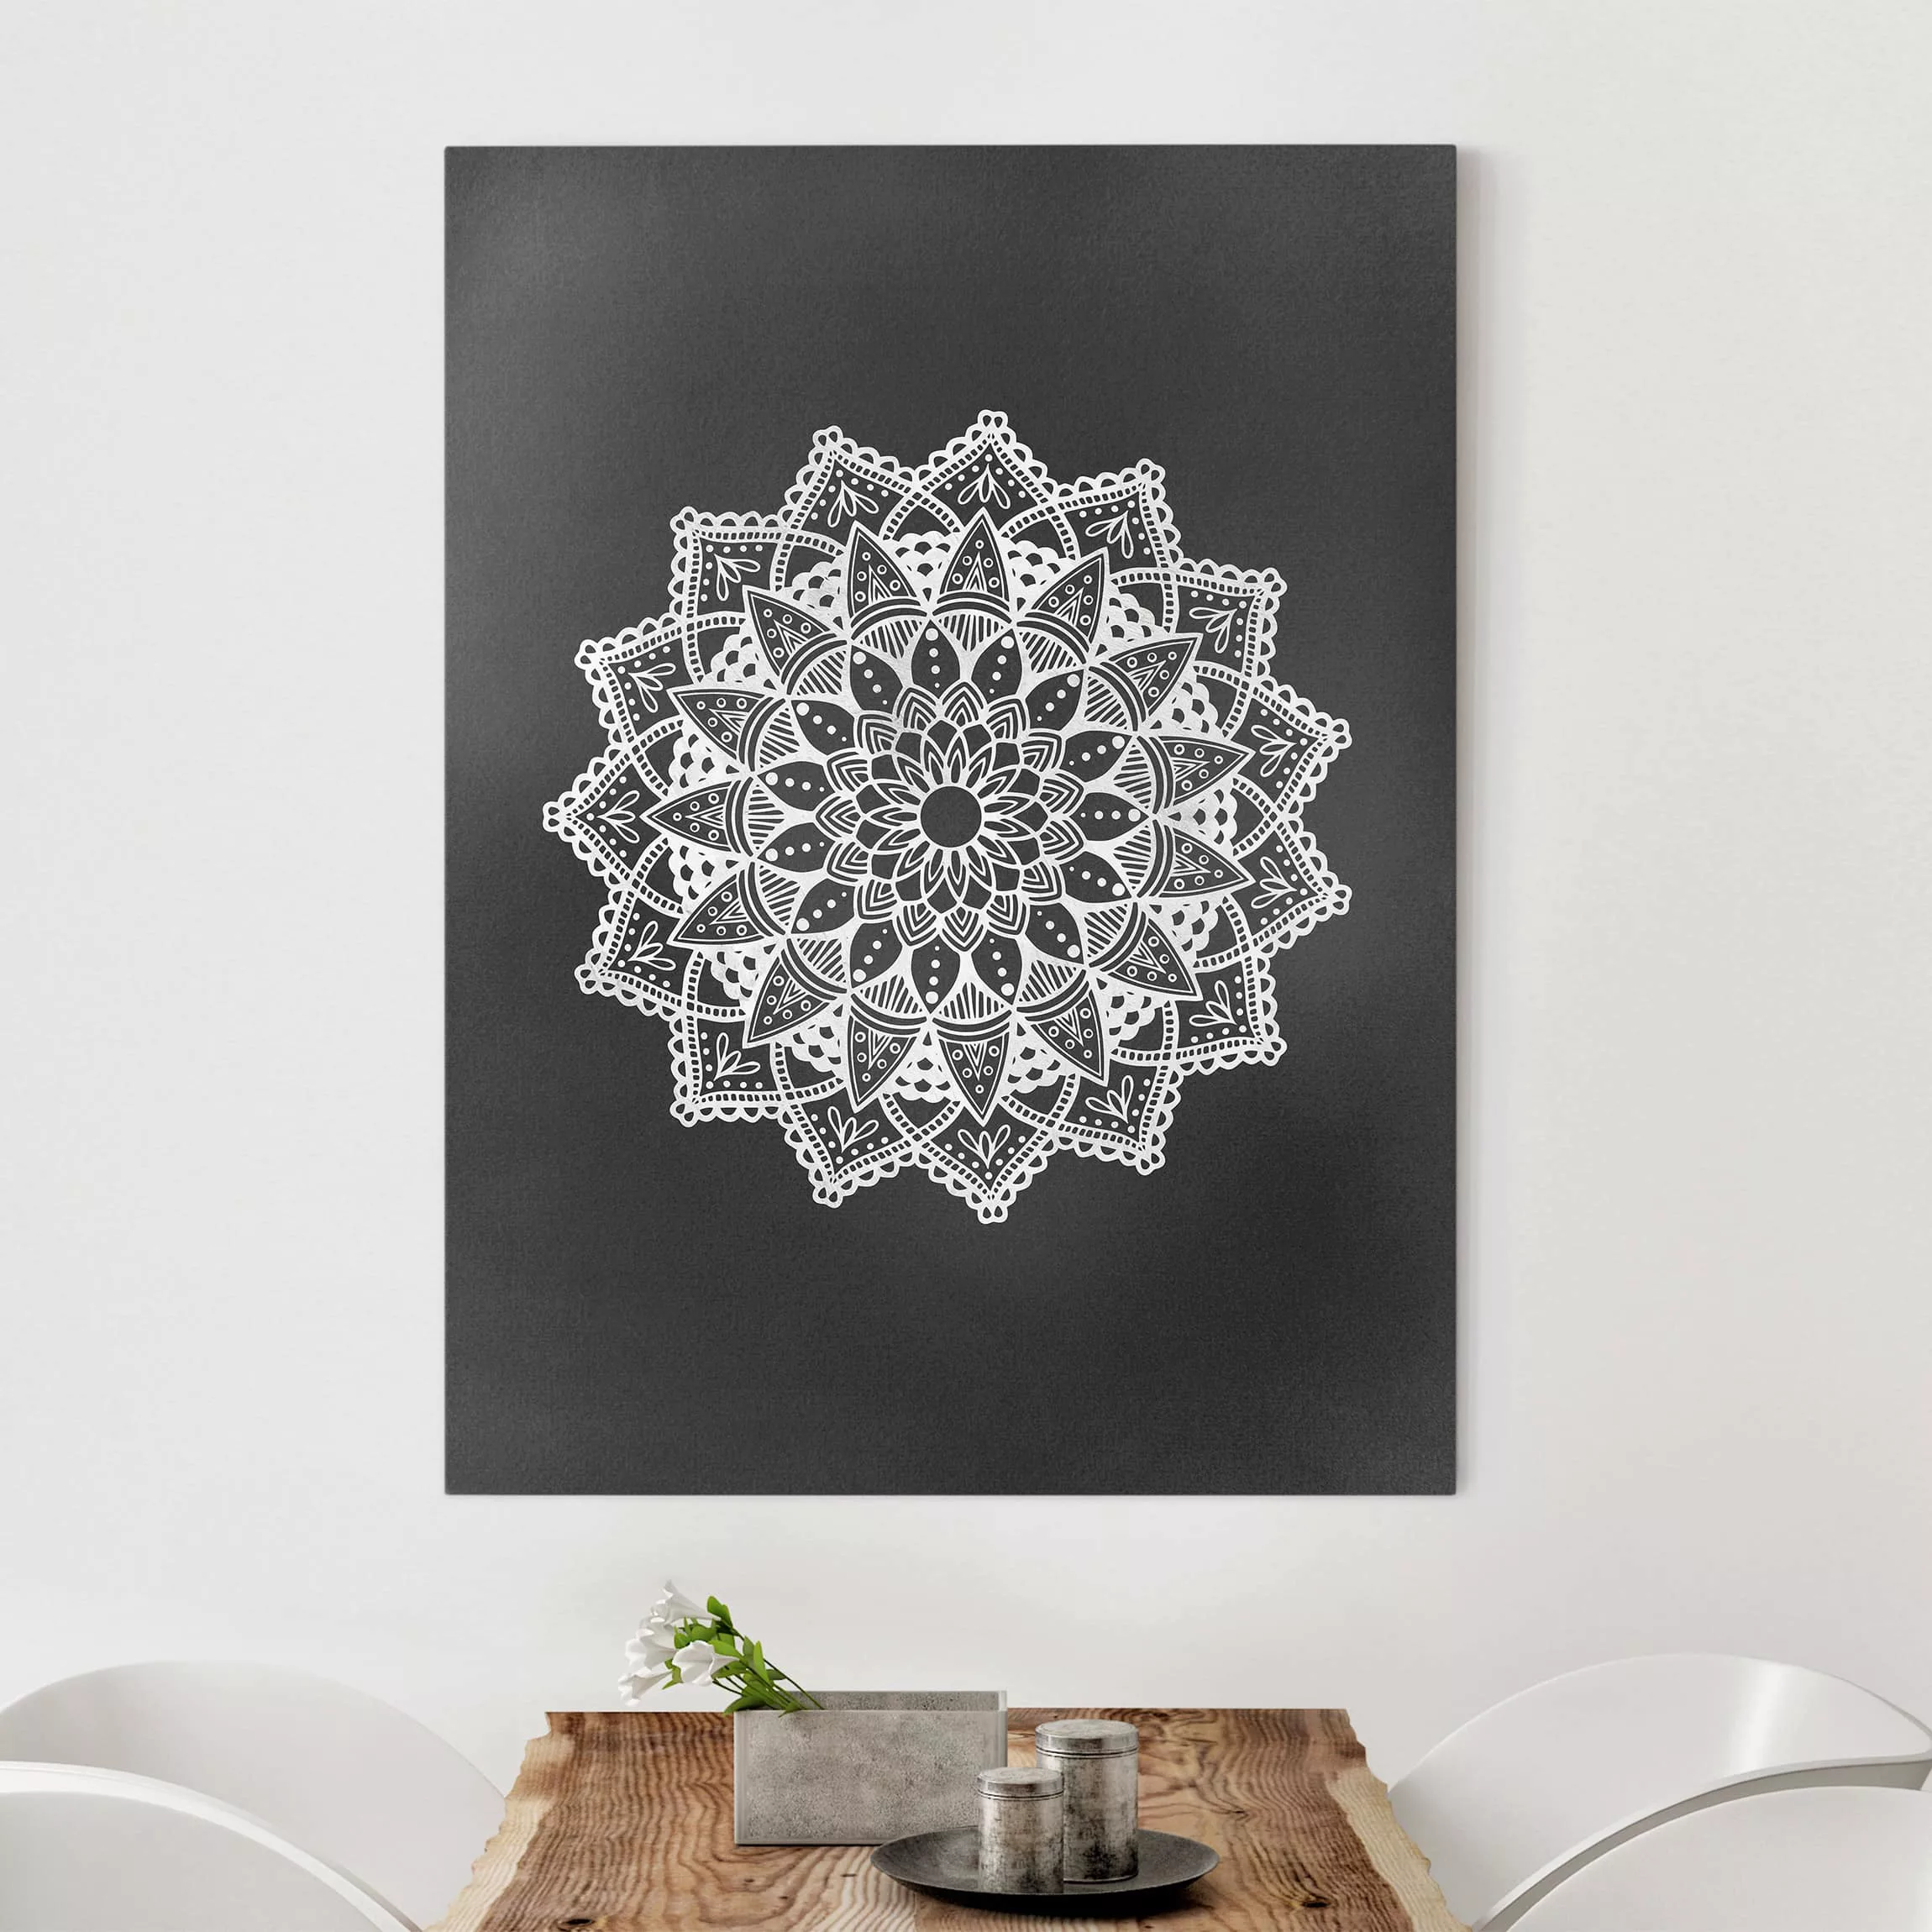 Leinwandbild Mandala Illustration Ornament weiß schwarz günstig online kaufen